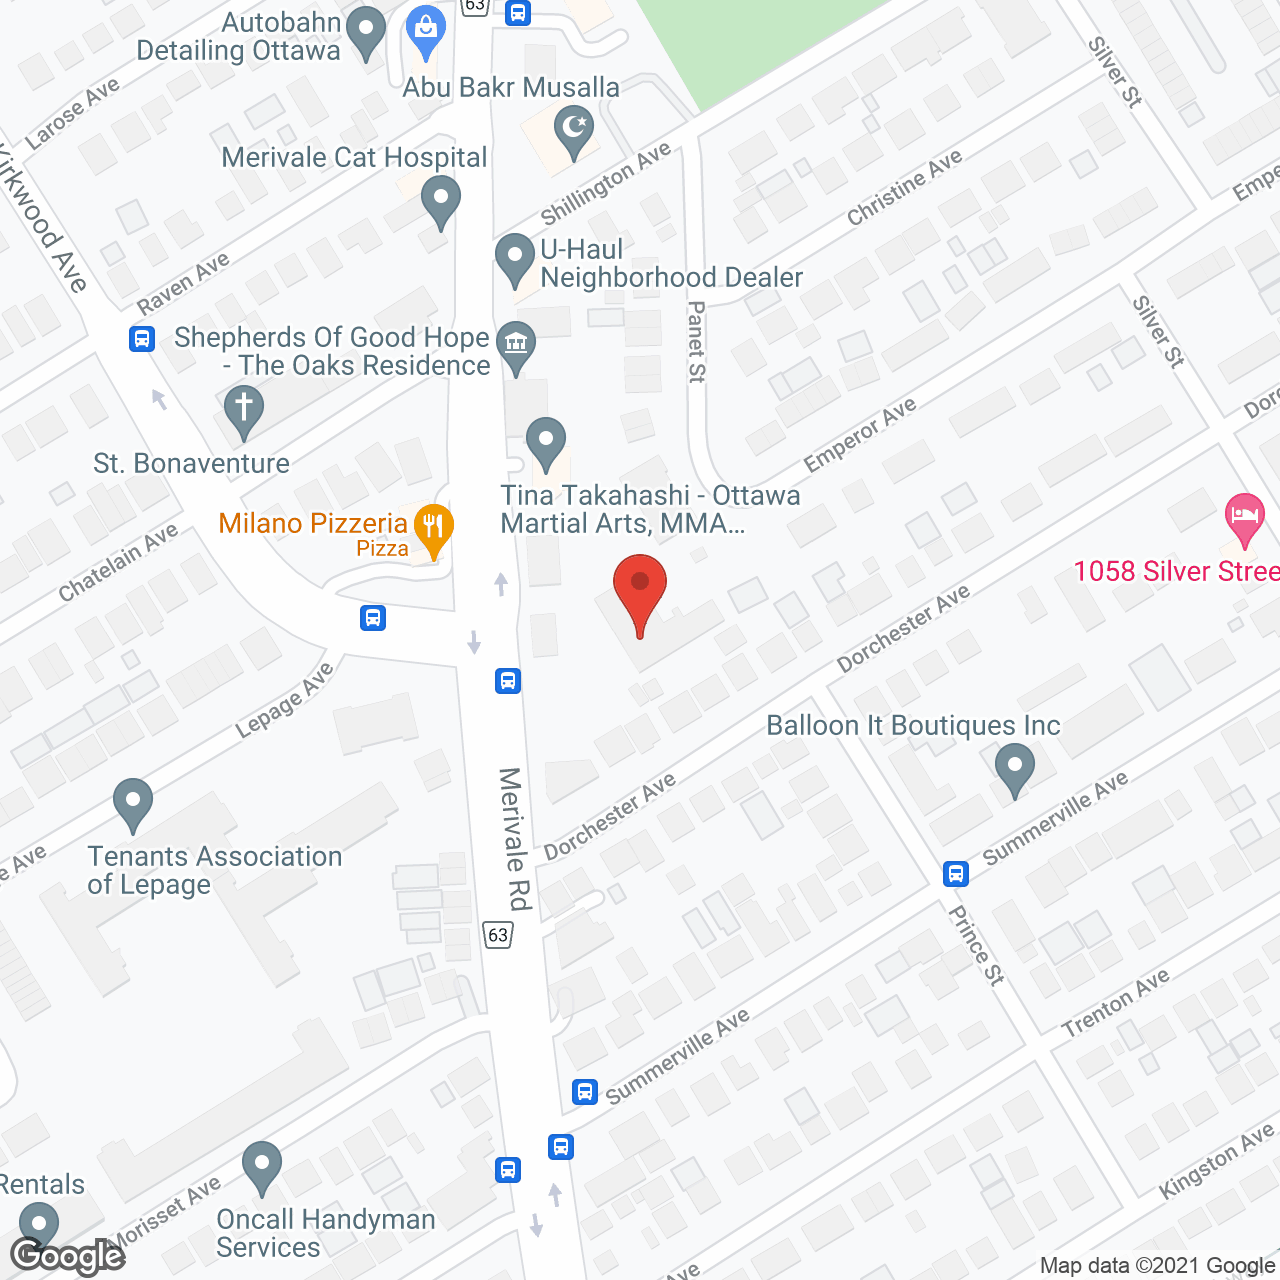 Parklane Residence in google map